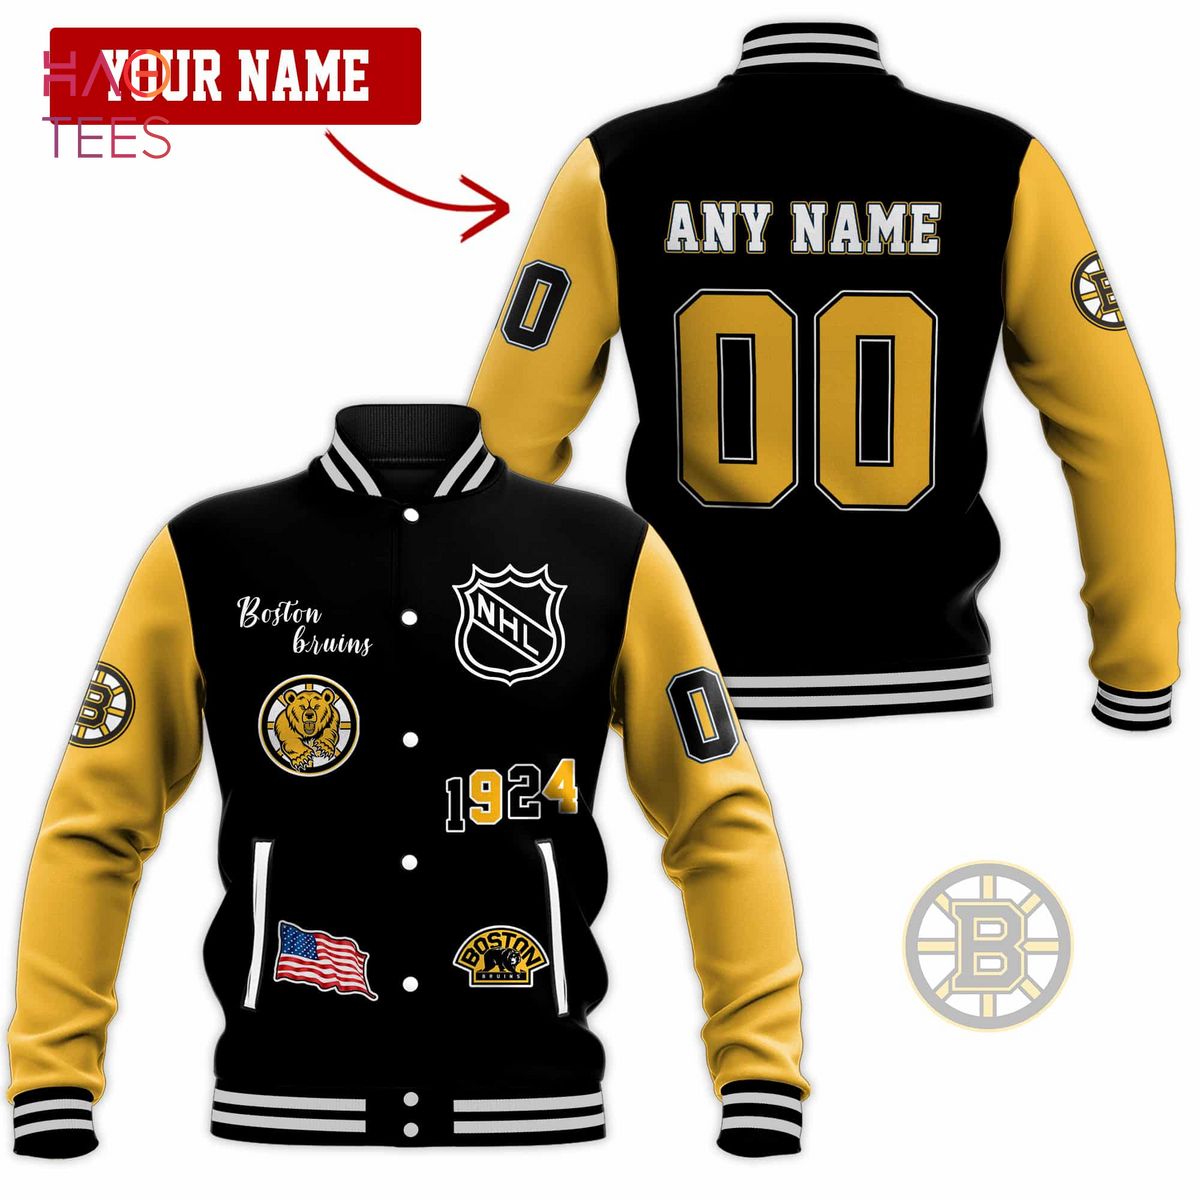 BEST Baseball Jacket Boston Bruins Limited Edition